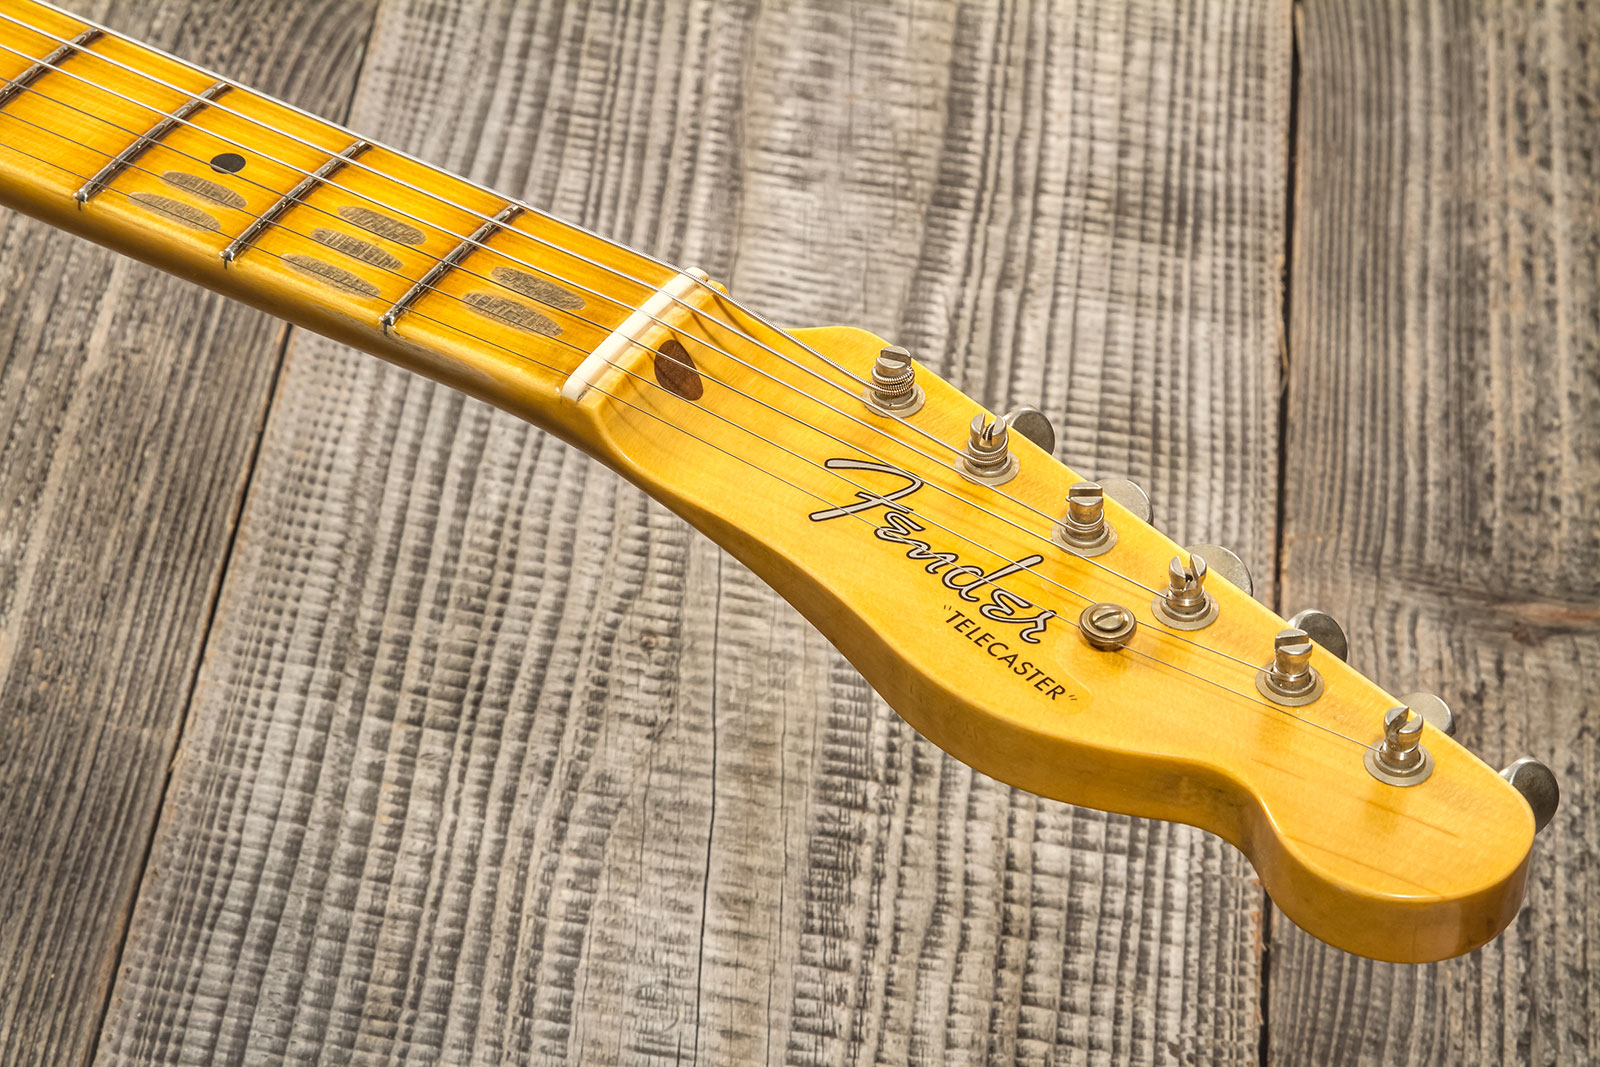 Fender Custom Shop Tele Thinline 50s Mn #cz574212 - Journeyman Relic Aged 2-color Sunburst - Tel shape electric guitar - Variation 8